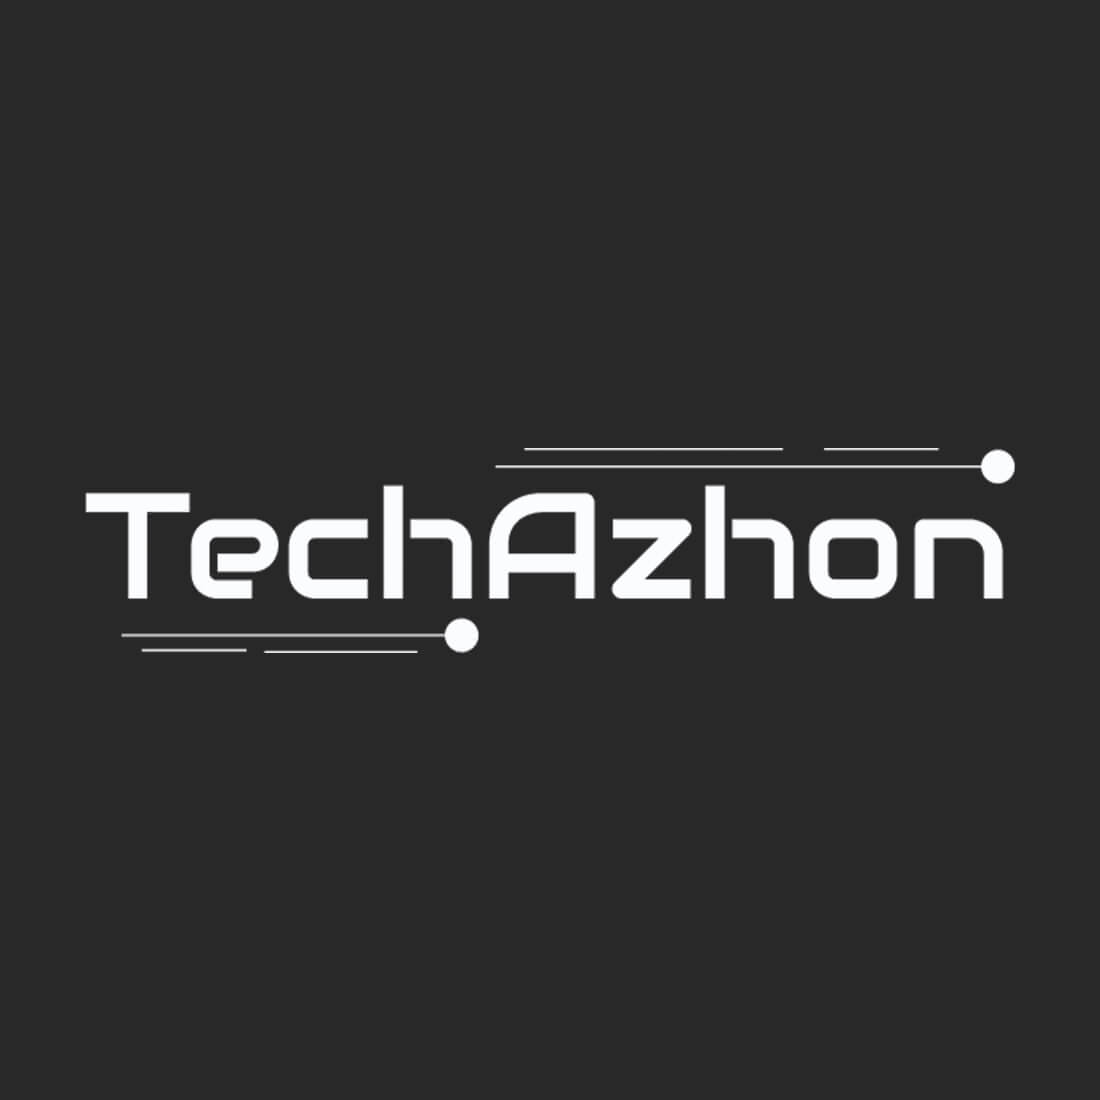 techazhon project